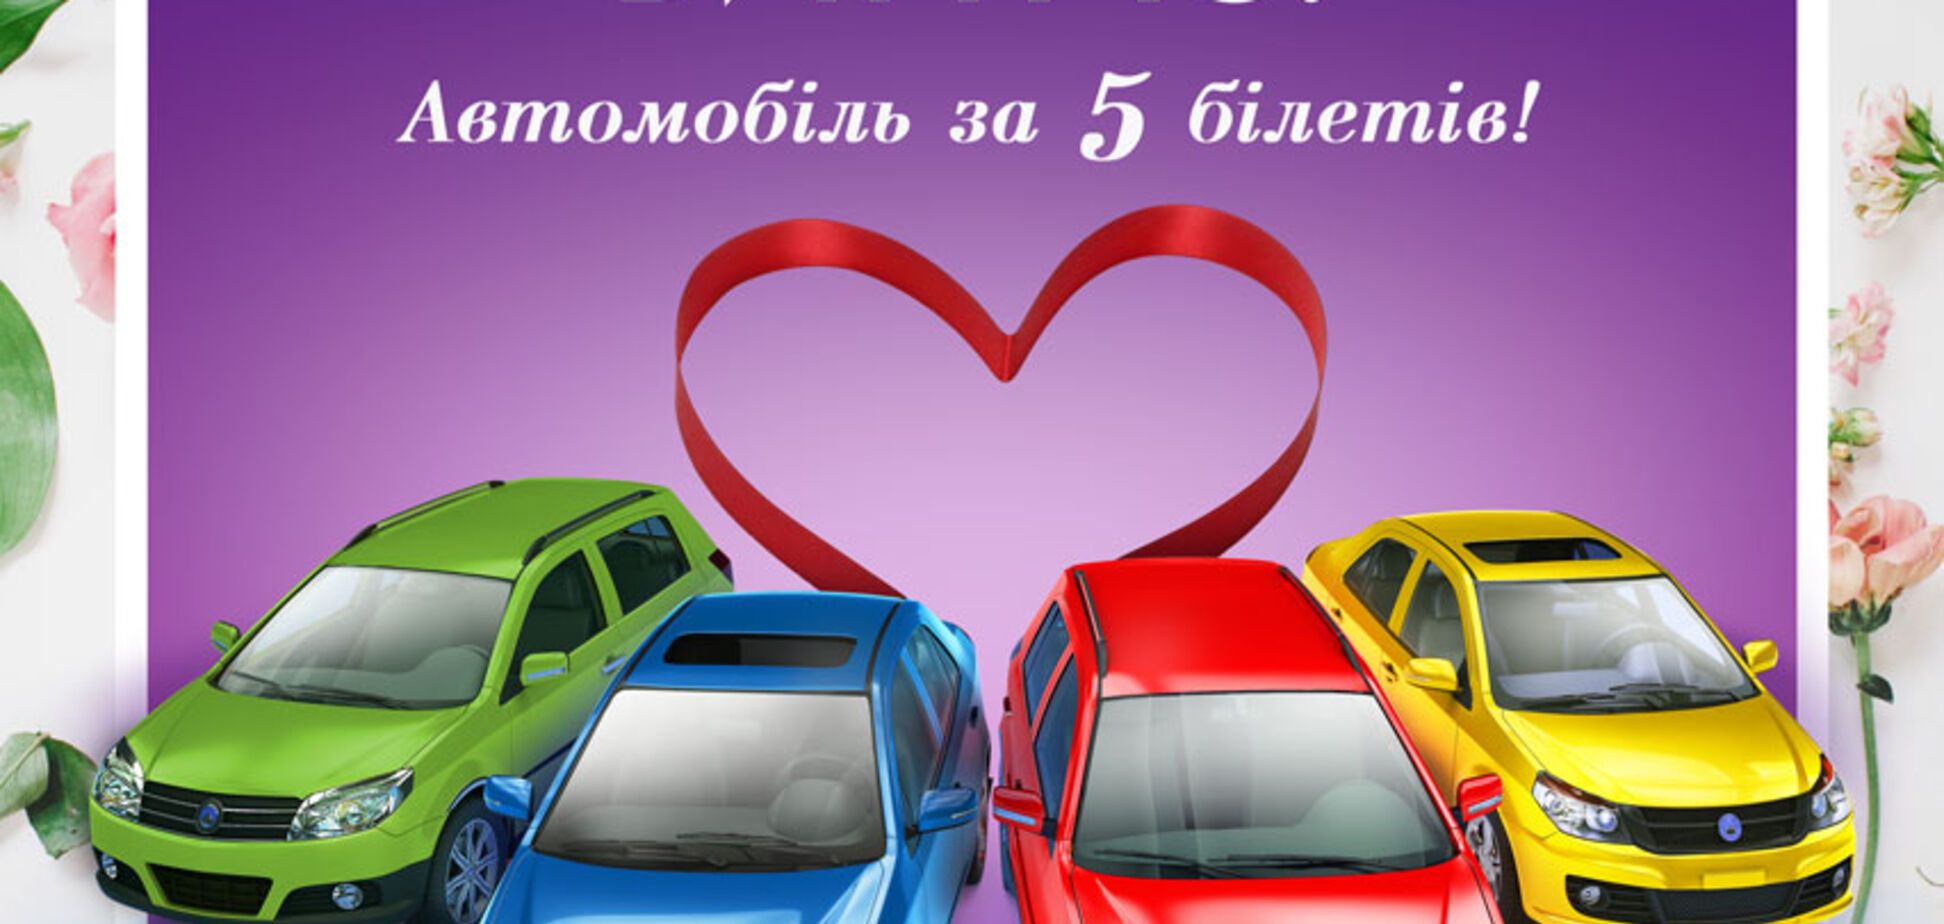 Авто за 50 грн: 'Лото-Забава' проводит новую акцию под девизом 'Хай любов виграє!'